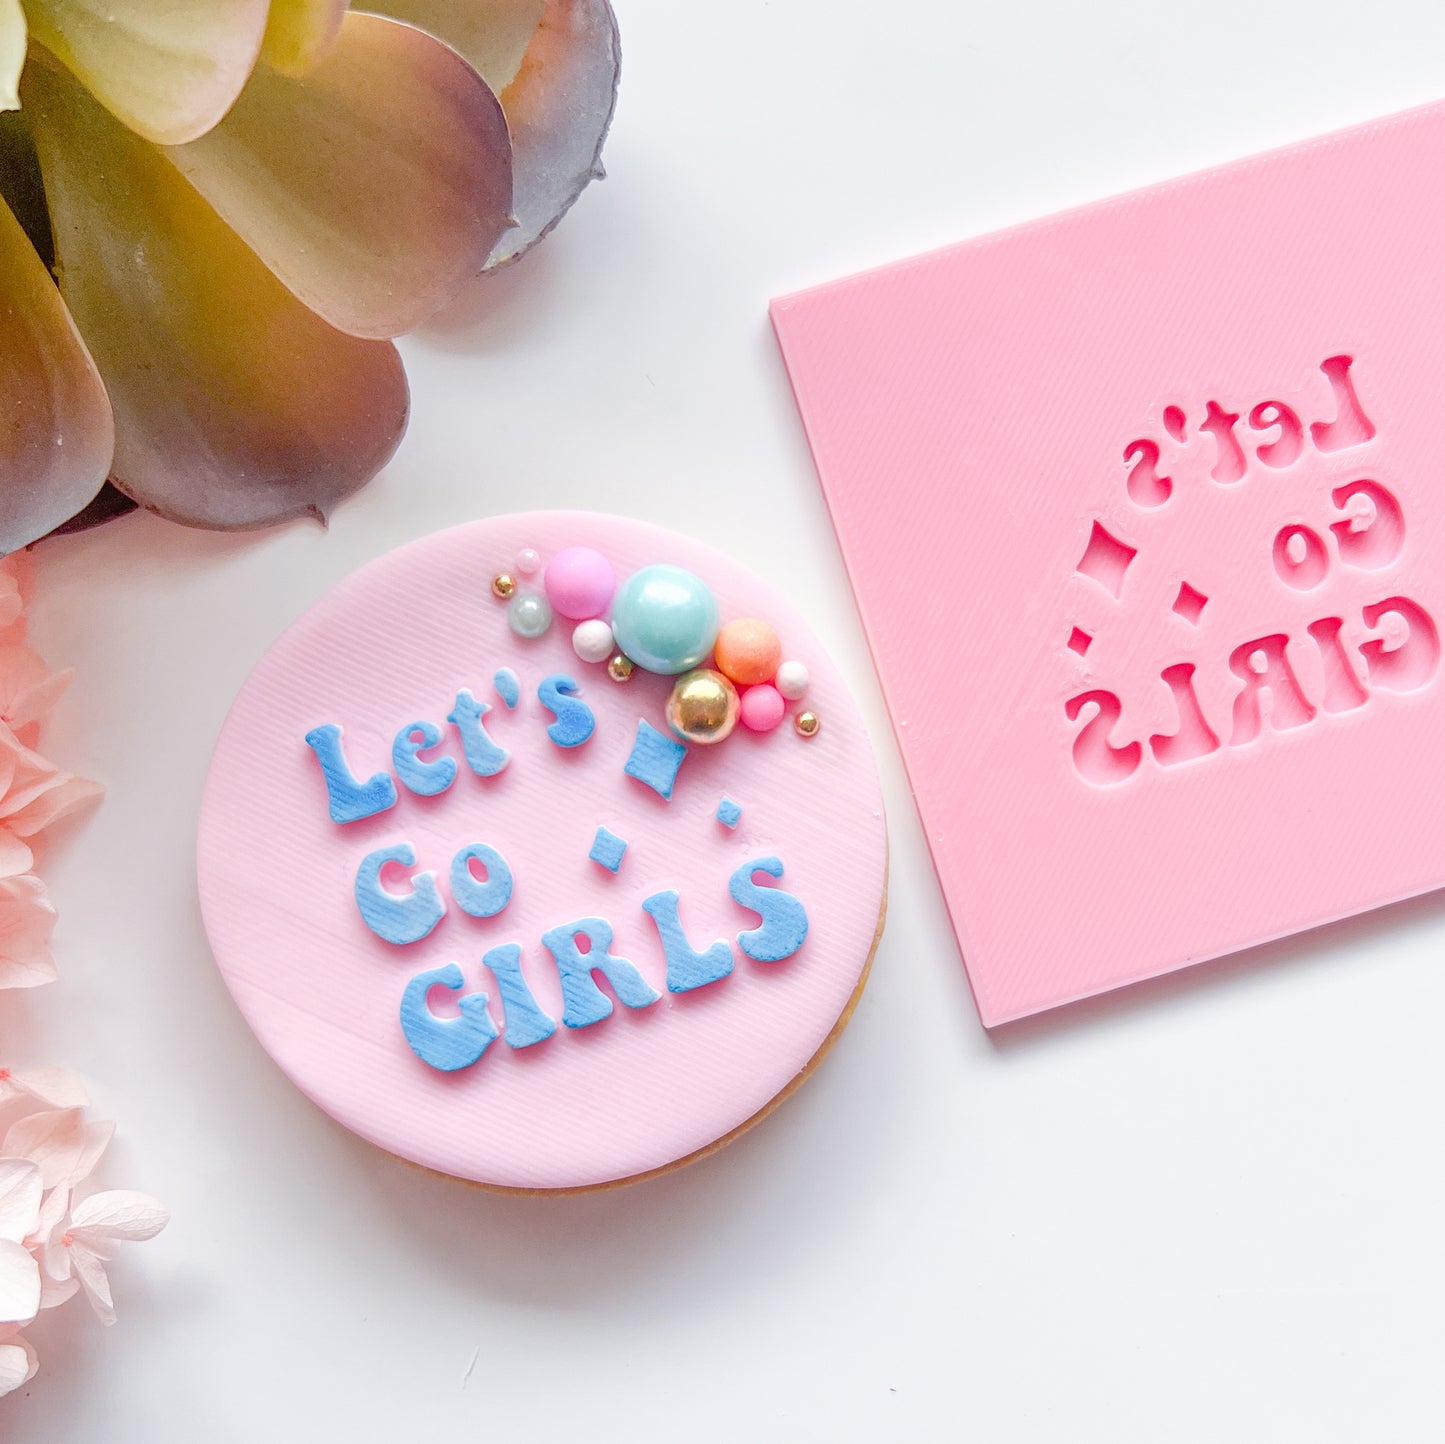 "Let's Go Girls" - Embossing Stamp